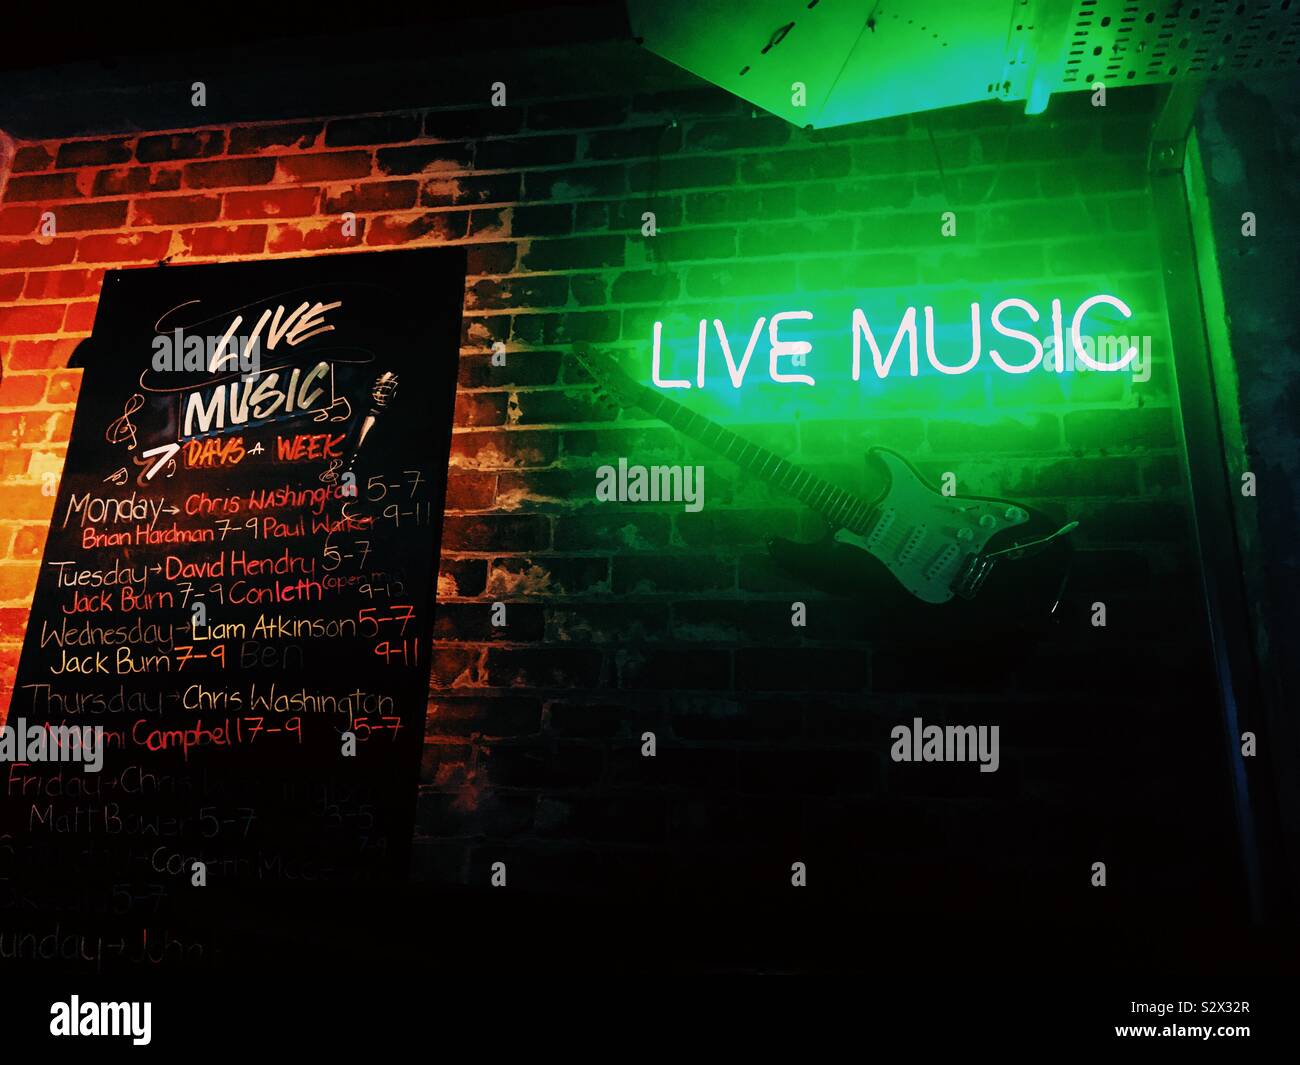 Live music in pub neon sign Stock Photo